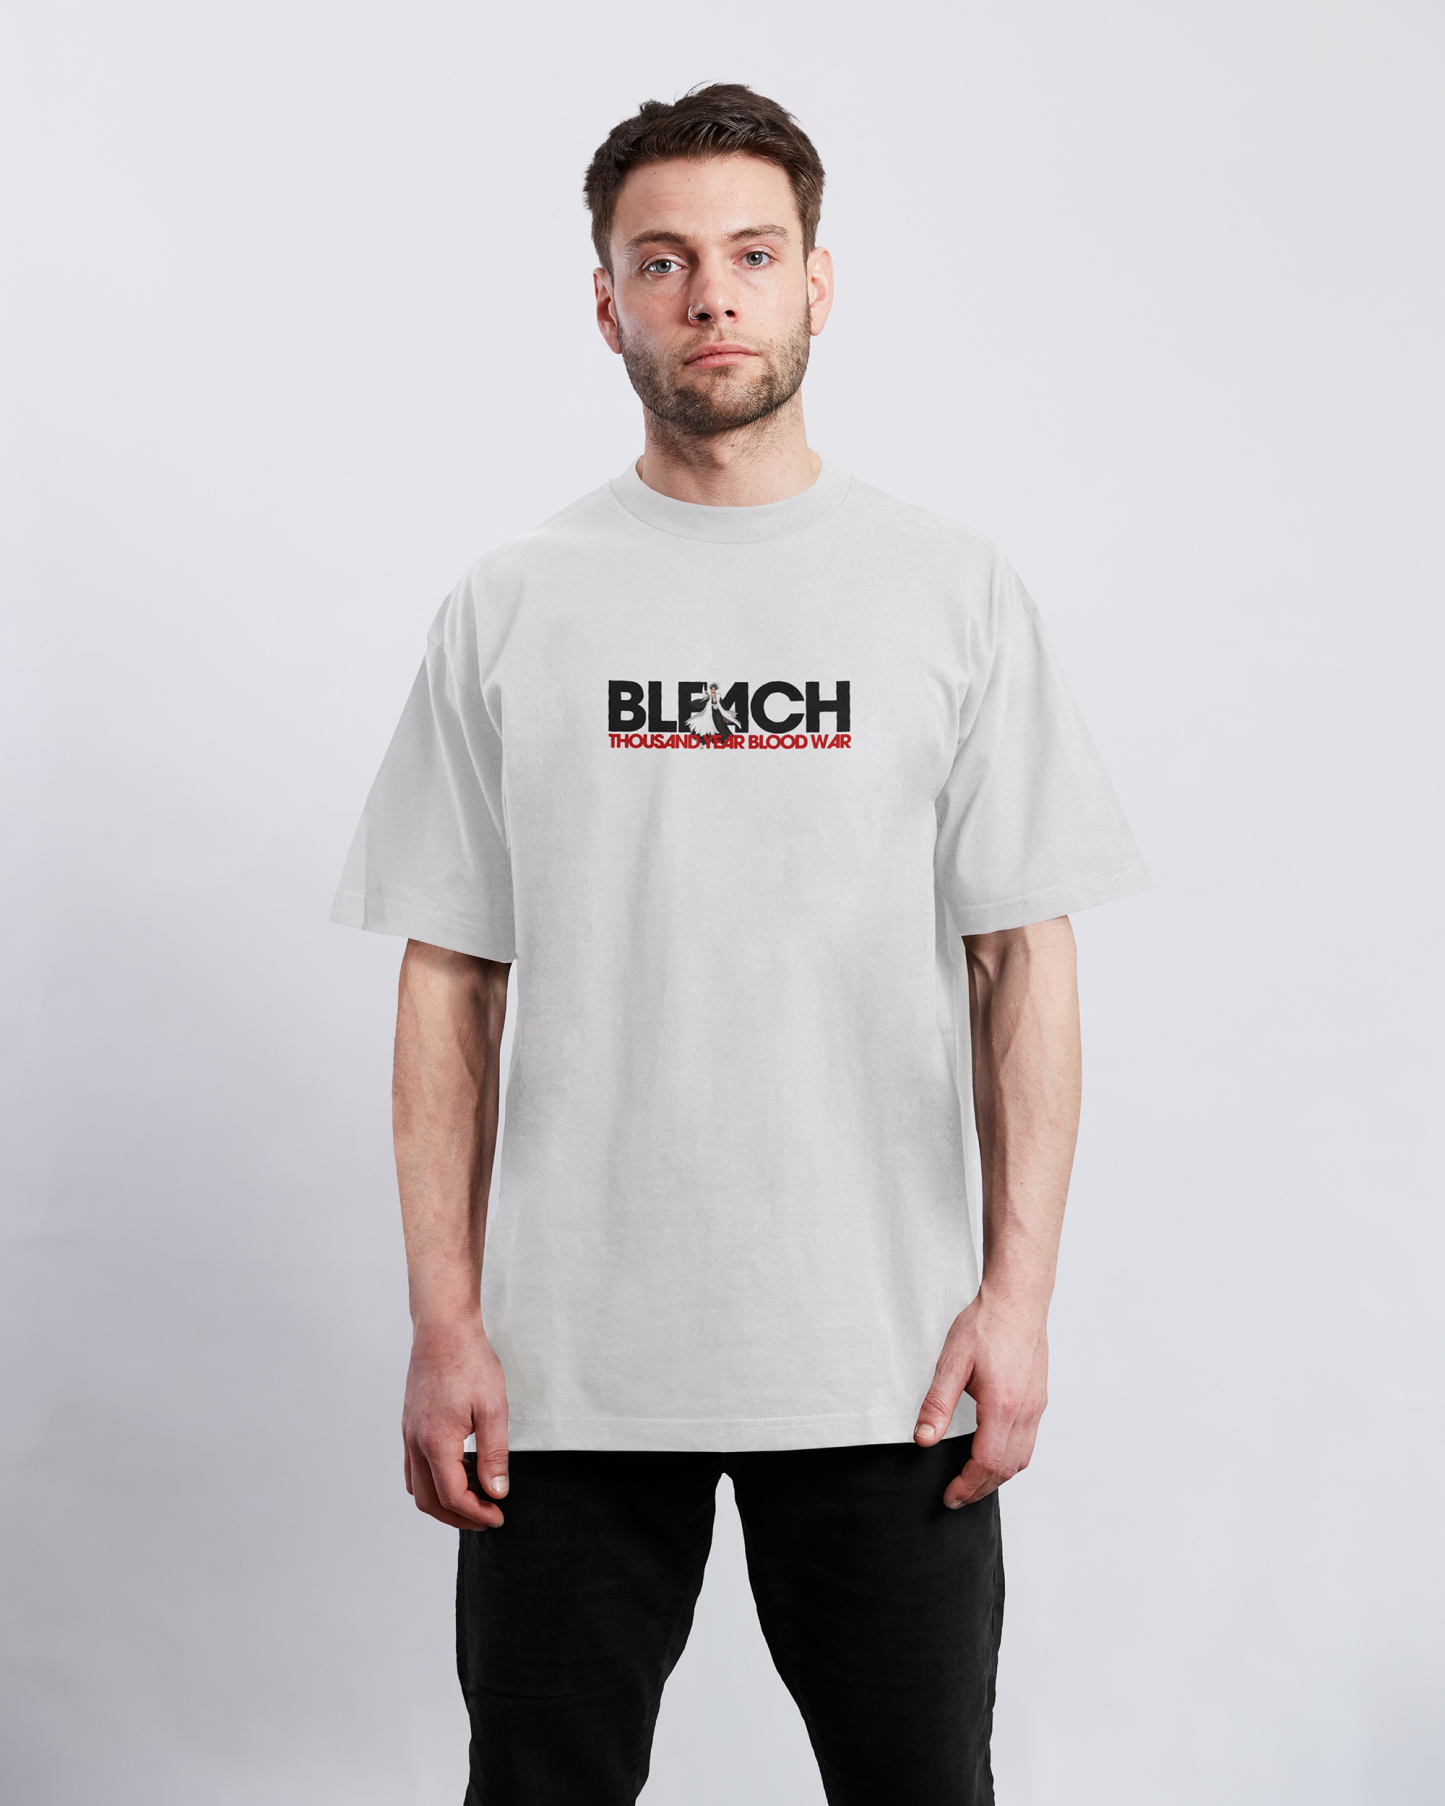 Kenpachi Zaraki Bleach | White T-Shirt TYBW